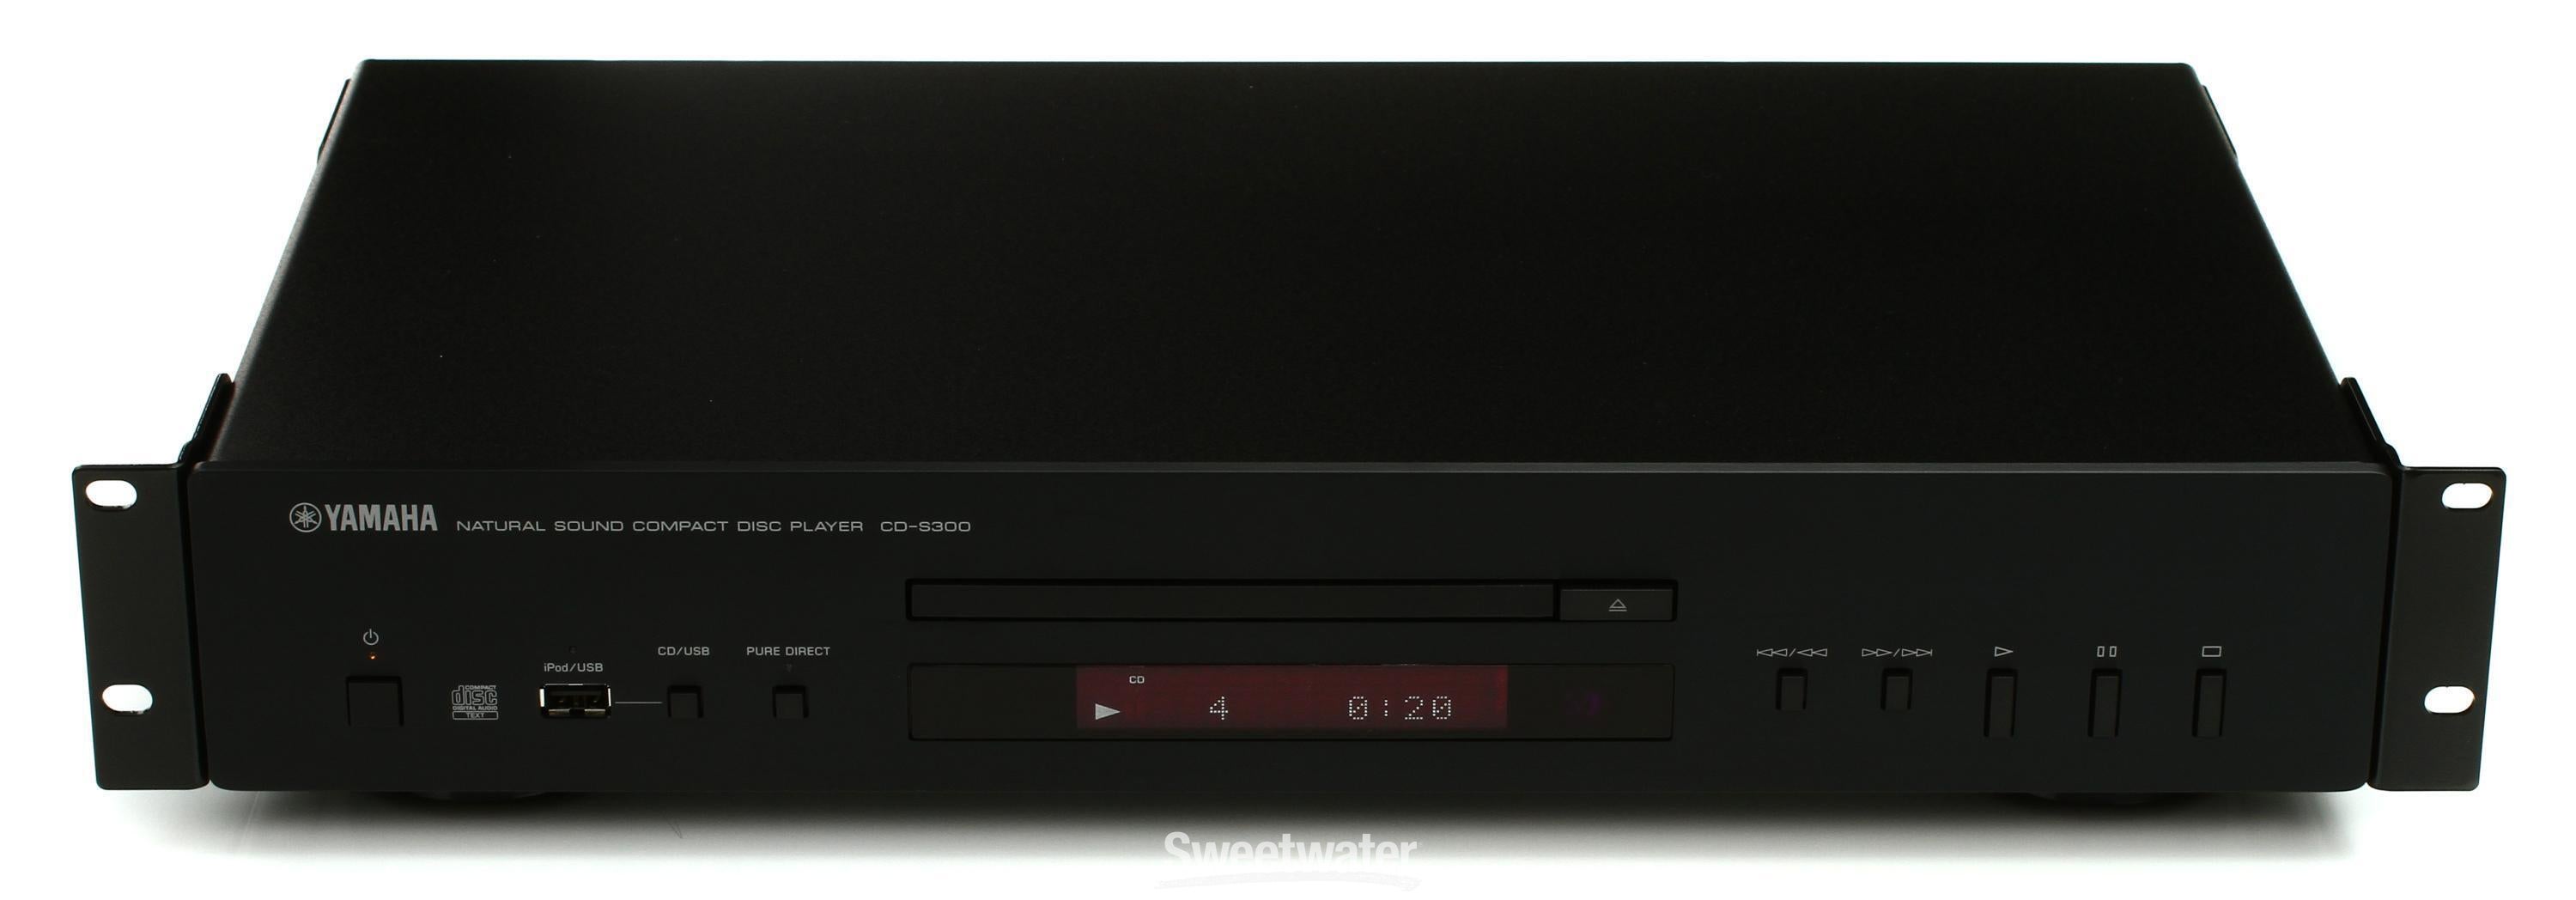 Yamaha CD-S300-RK Rackmount CD Player | Sweetwater